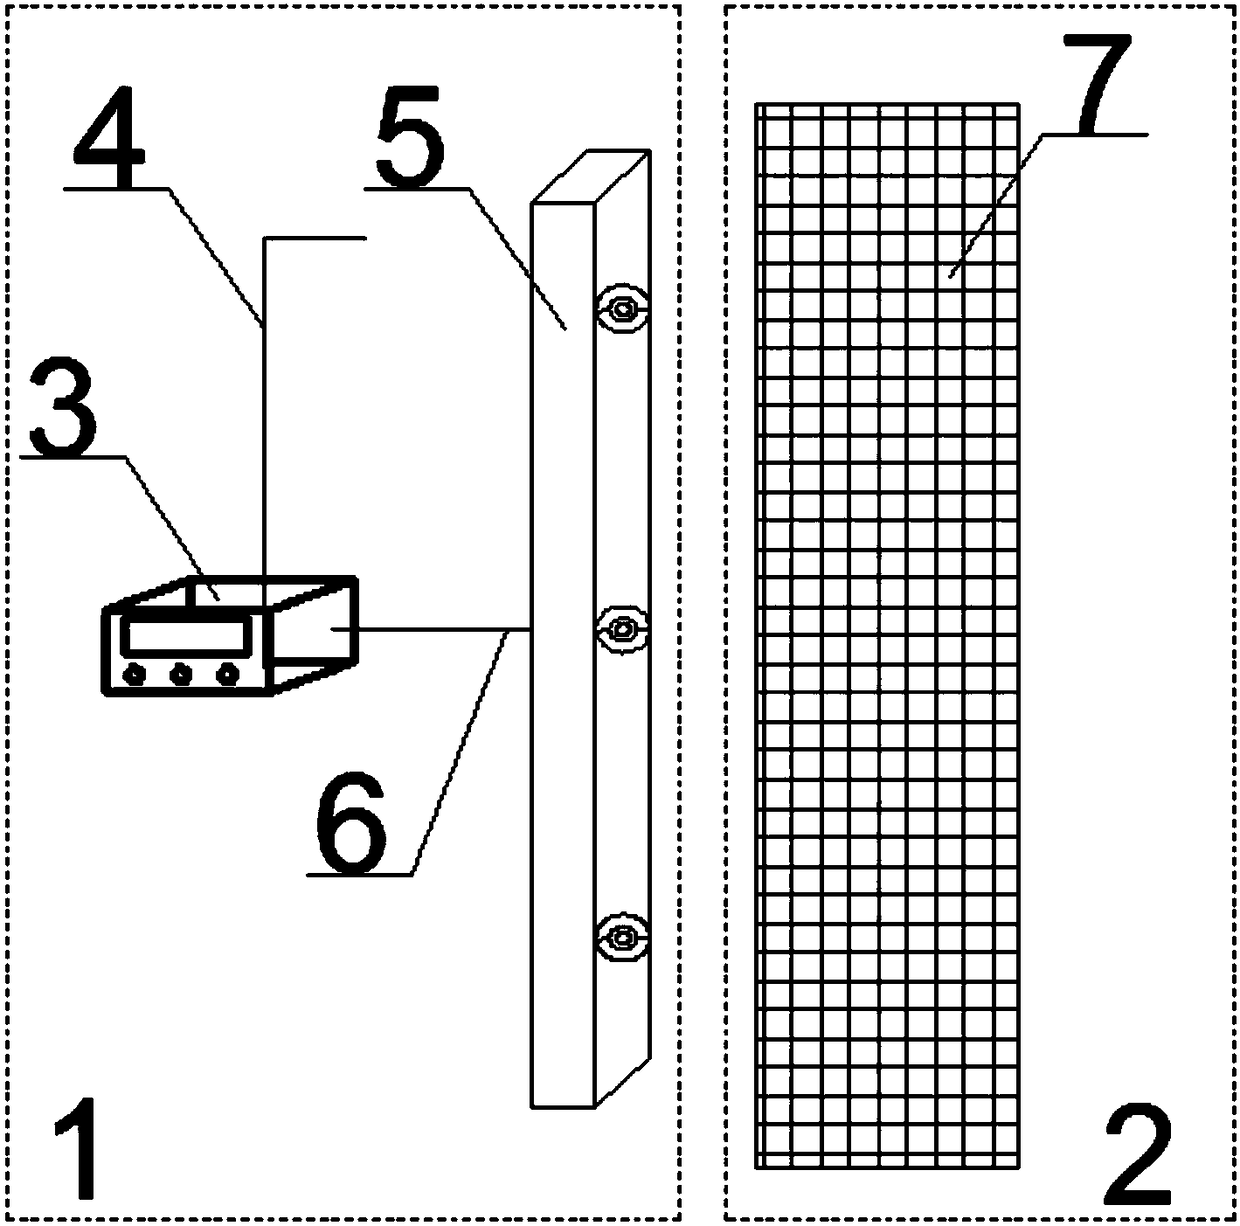 Multi-split outdoor unit defrosting control system and method